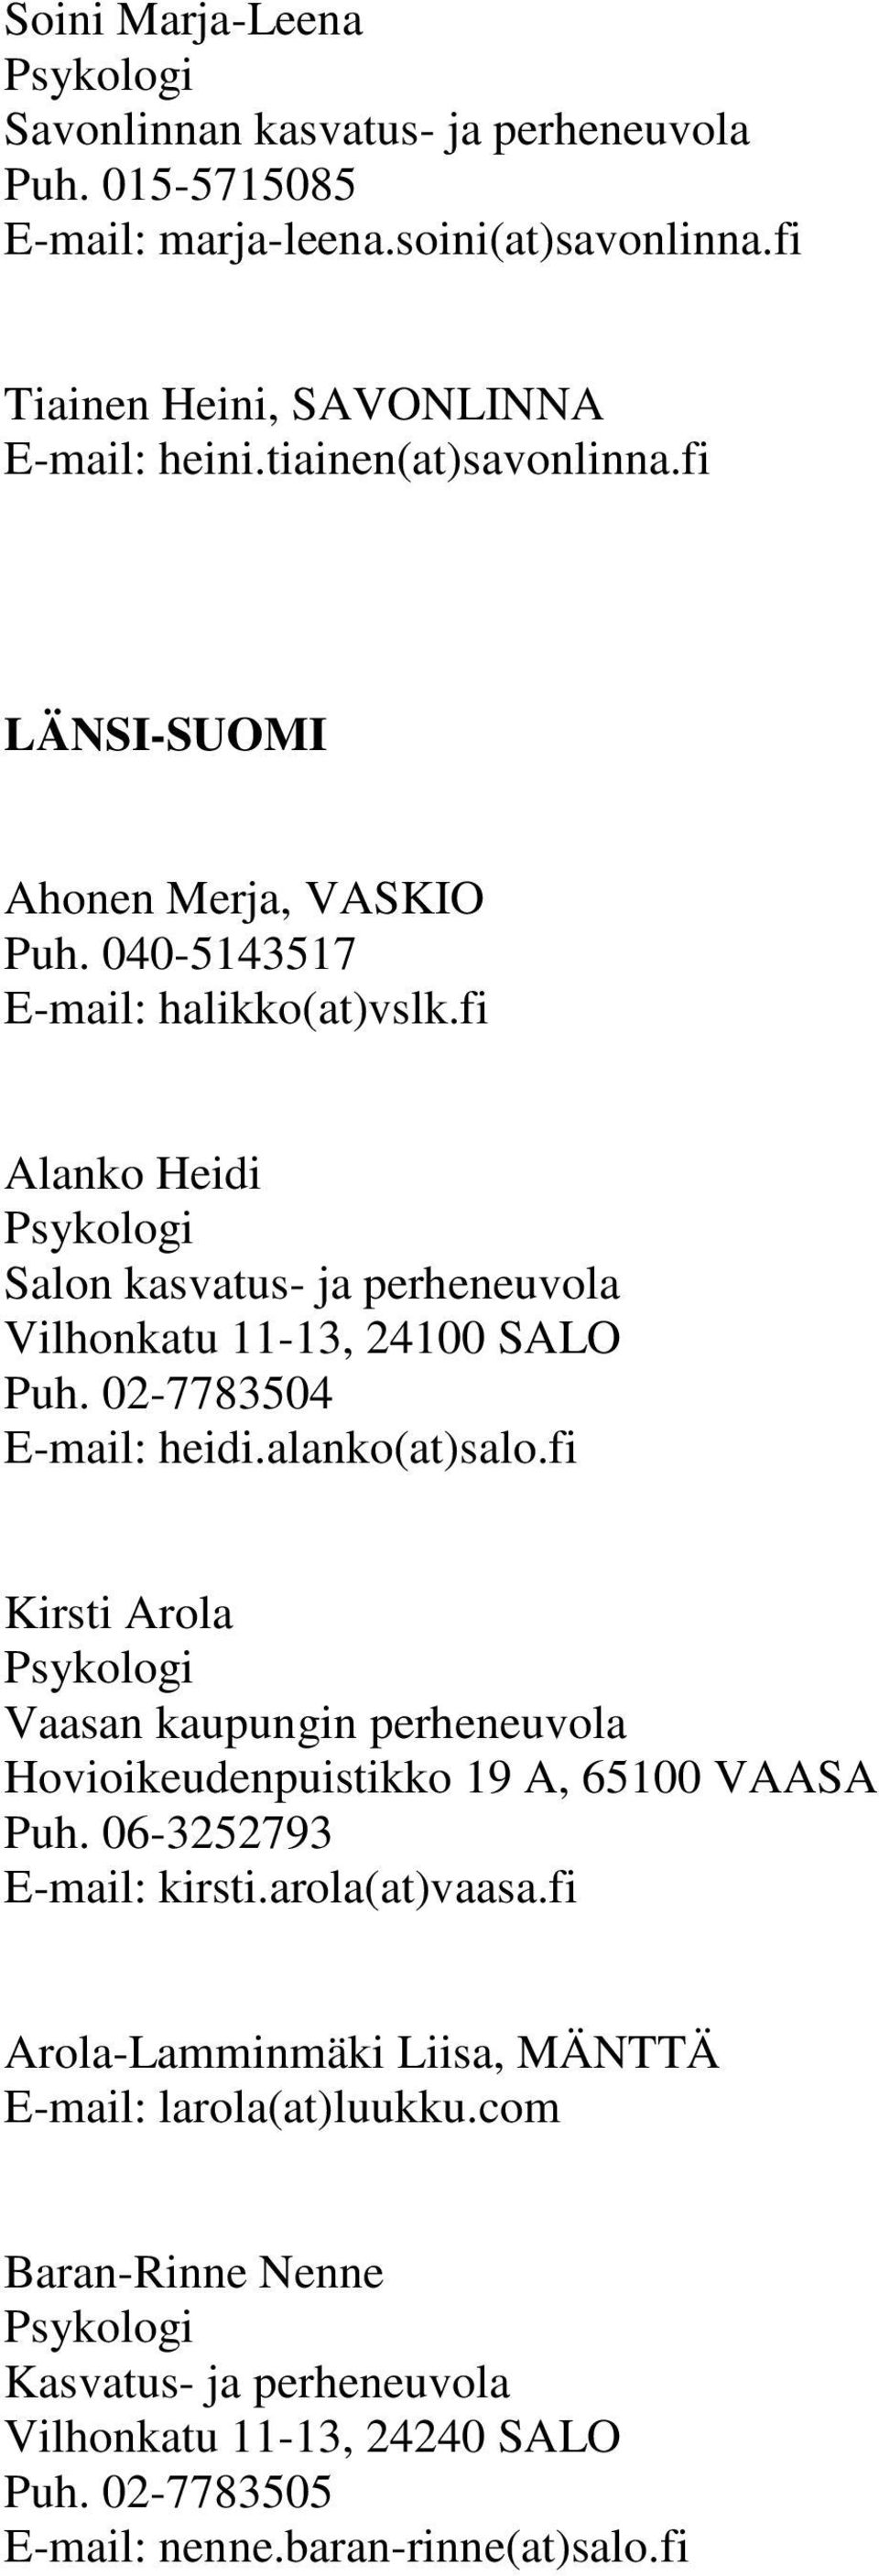 fi Alanko Heidi Salon kasvatus- ja perheneuvola Vilhonkatu 11-13, 24100 SALO Puh. 02-7783504 E-mail: heidi.alanko(at)salo.